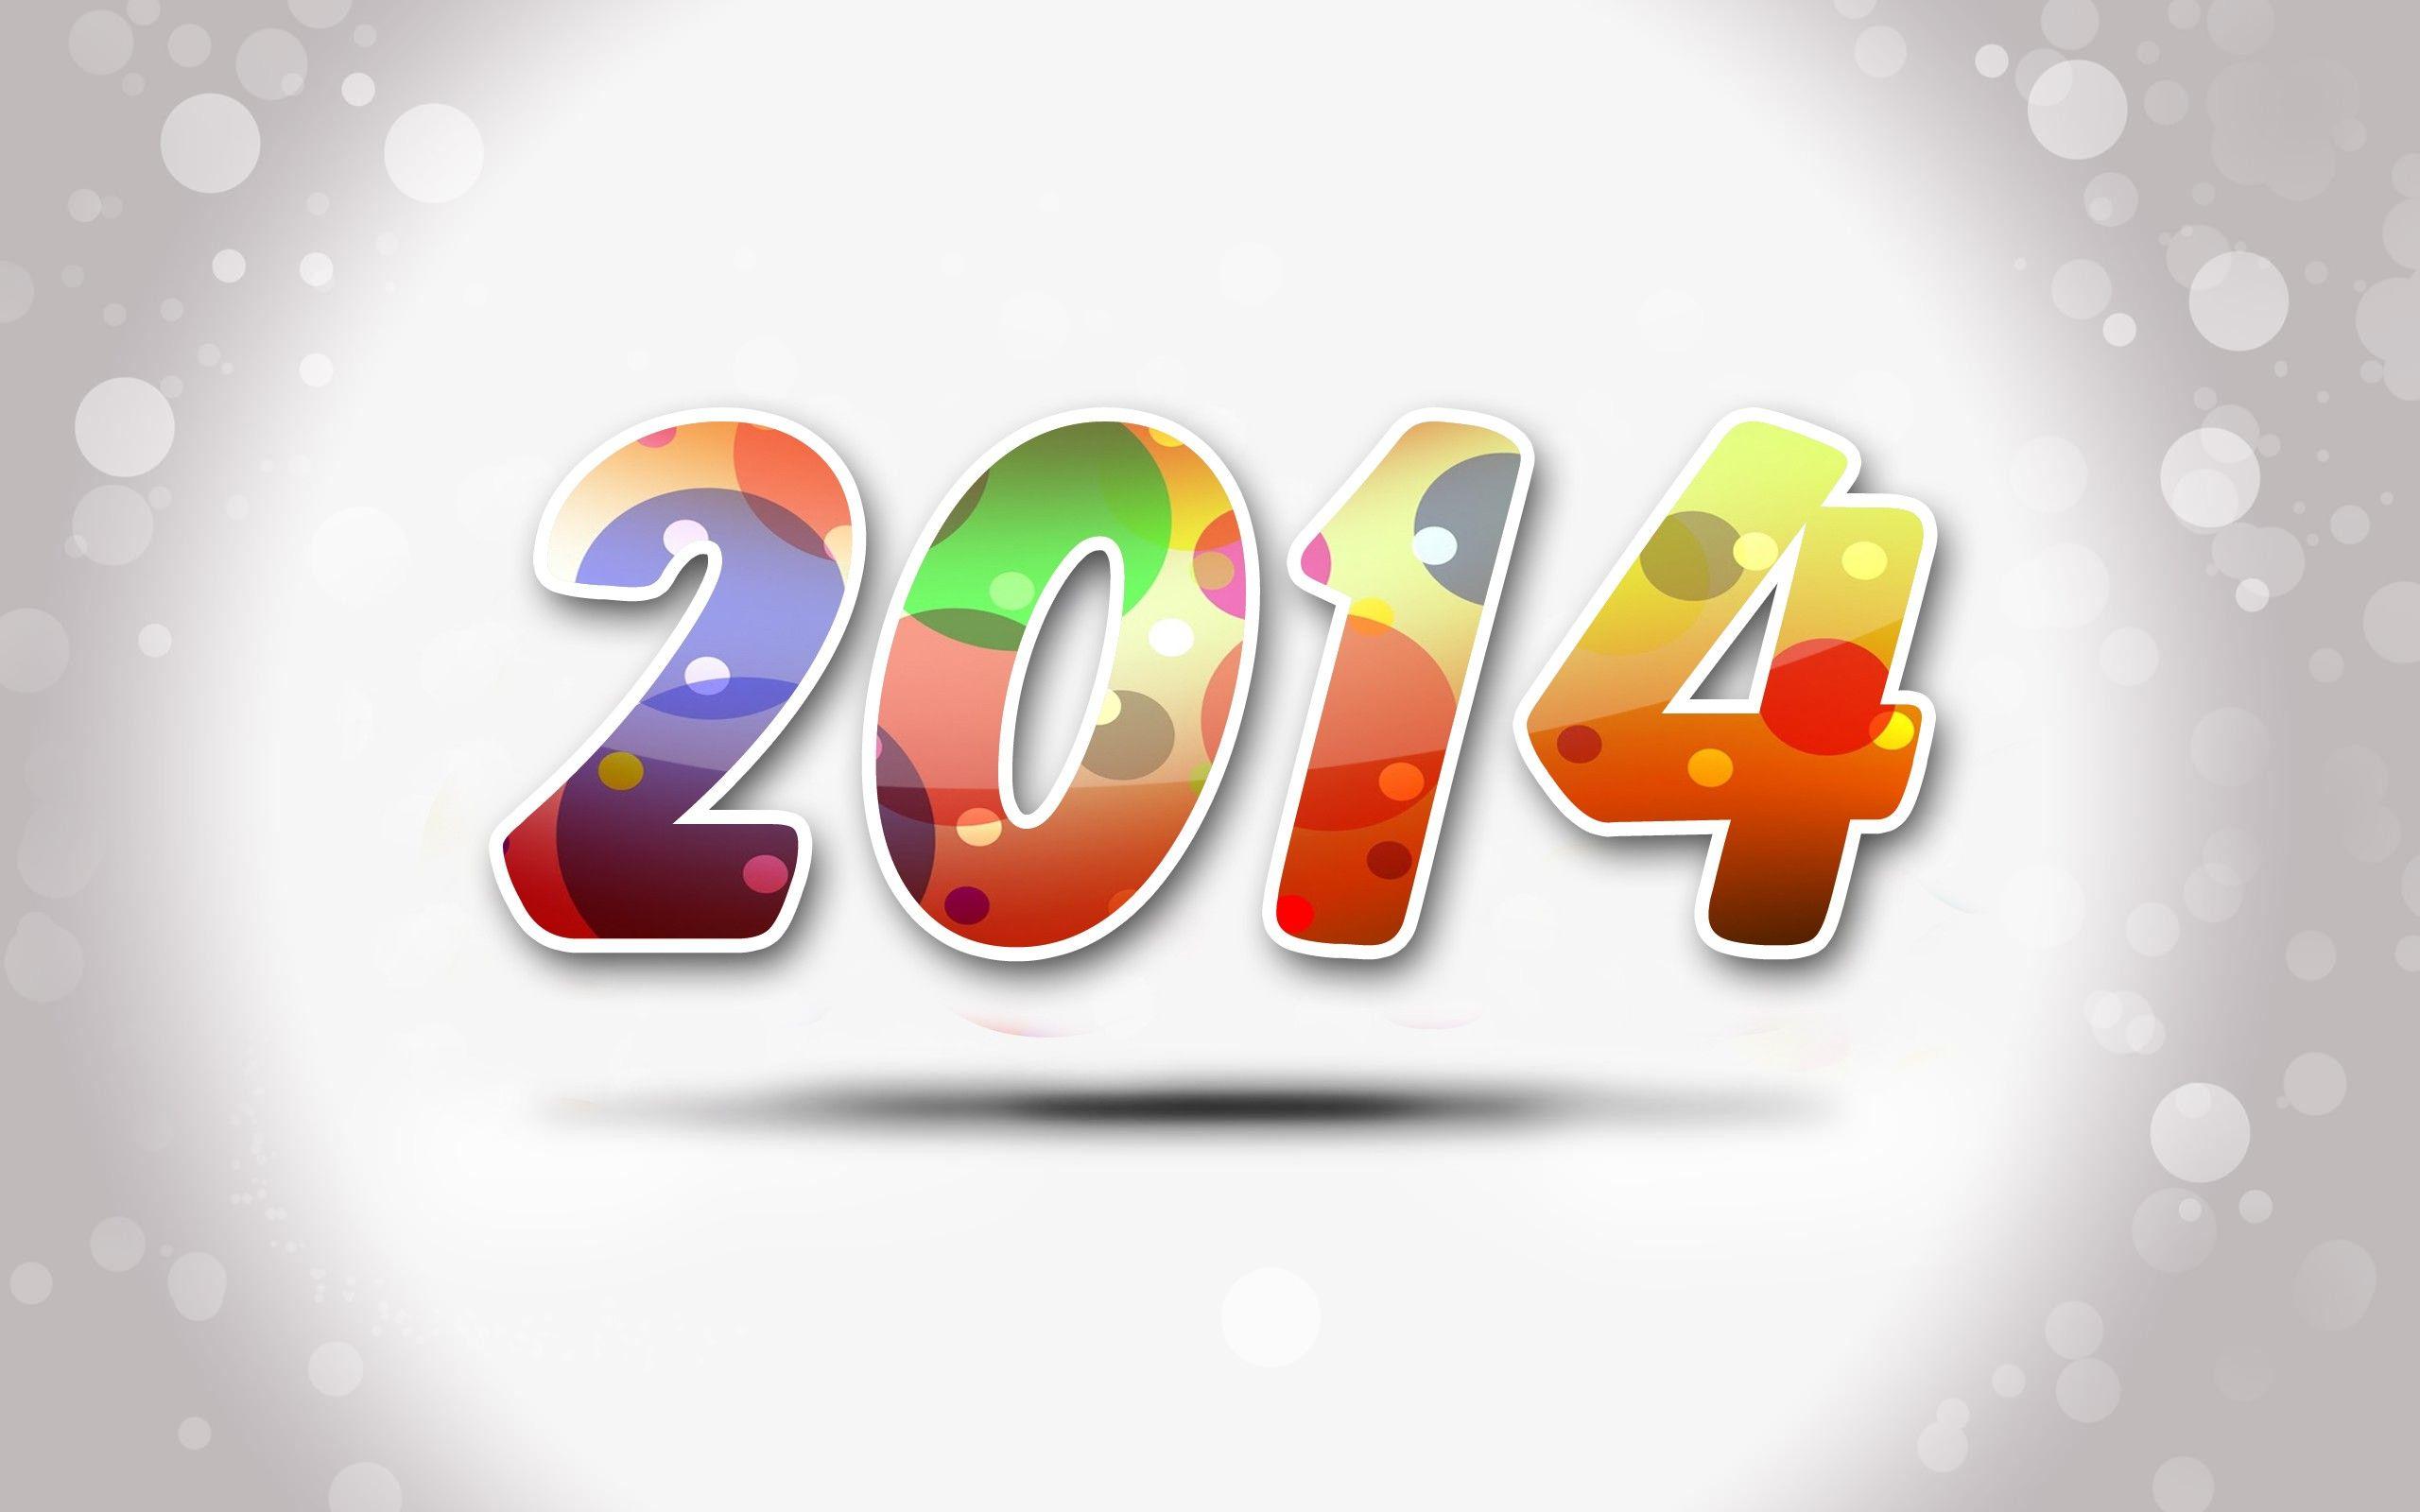 Happy New Year 2014 Wallpaper